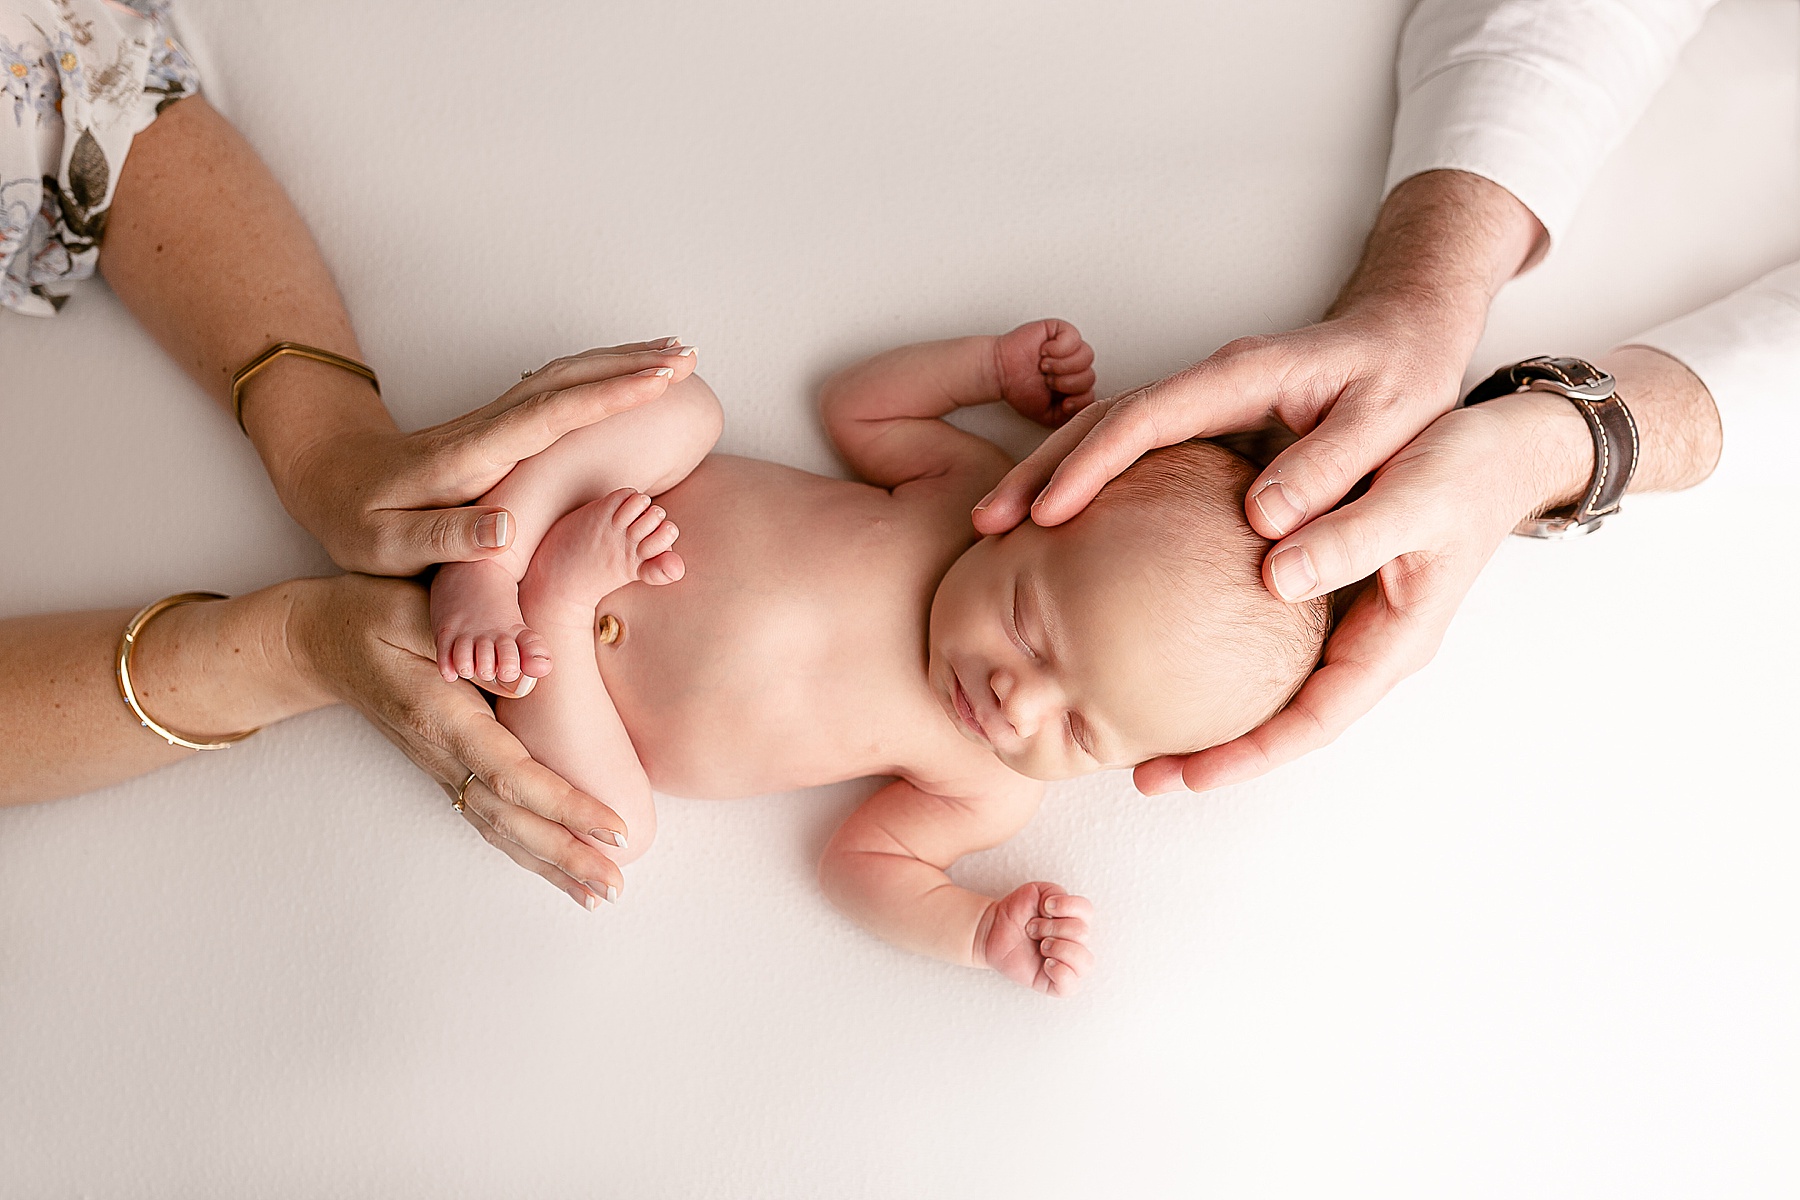 light-skinned parent hands on light-skinned newborn baby on white backdrop - portland oregon newborn portrait studio